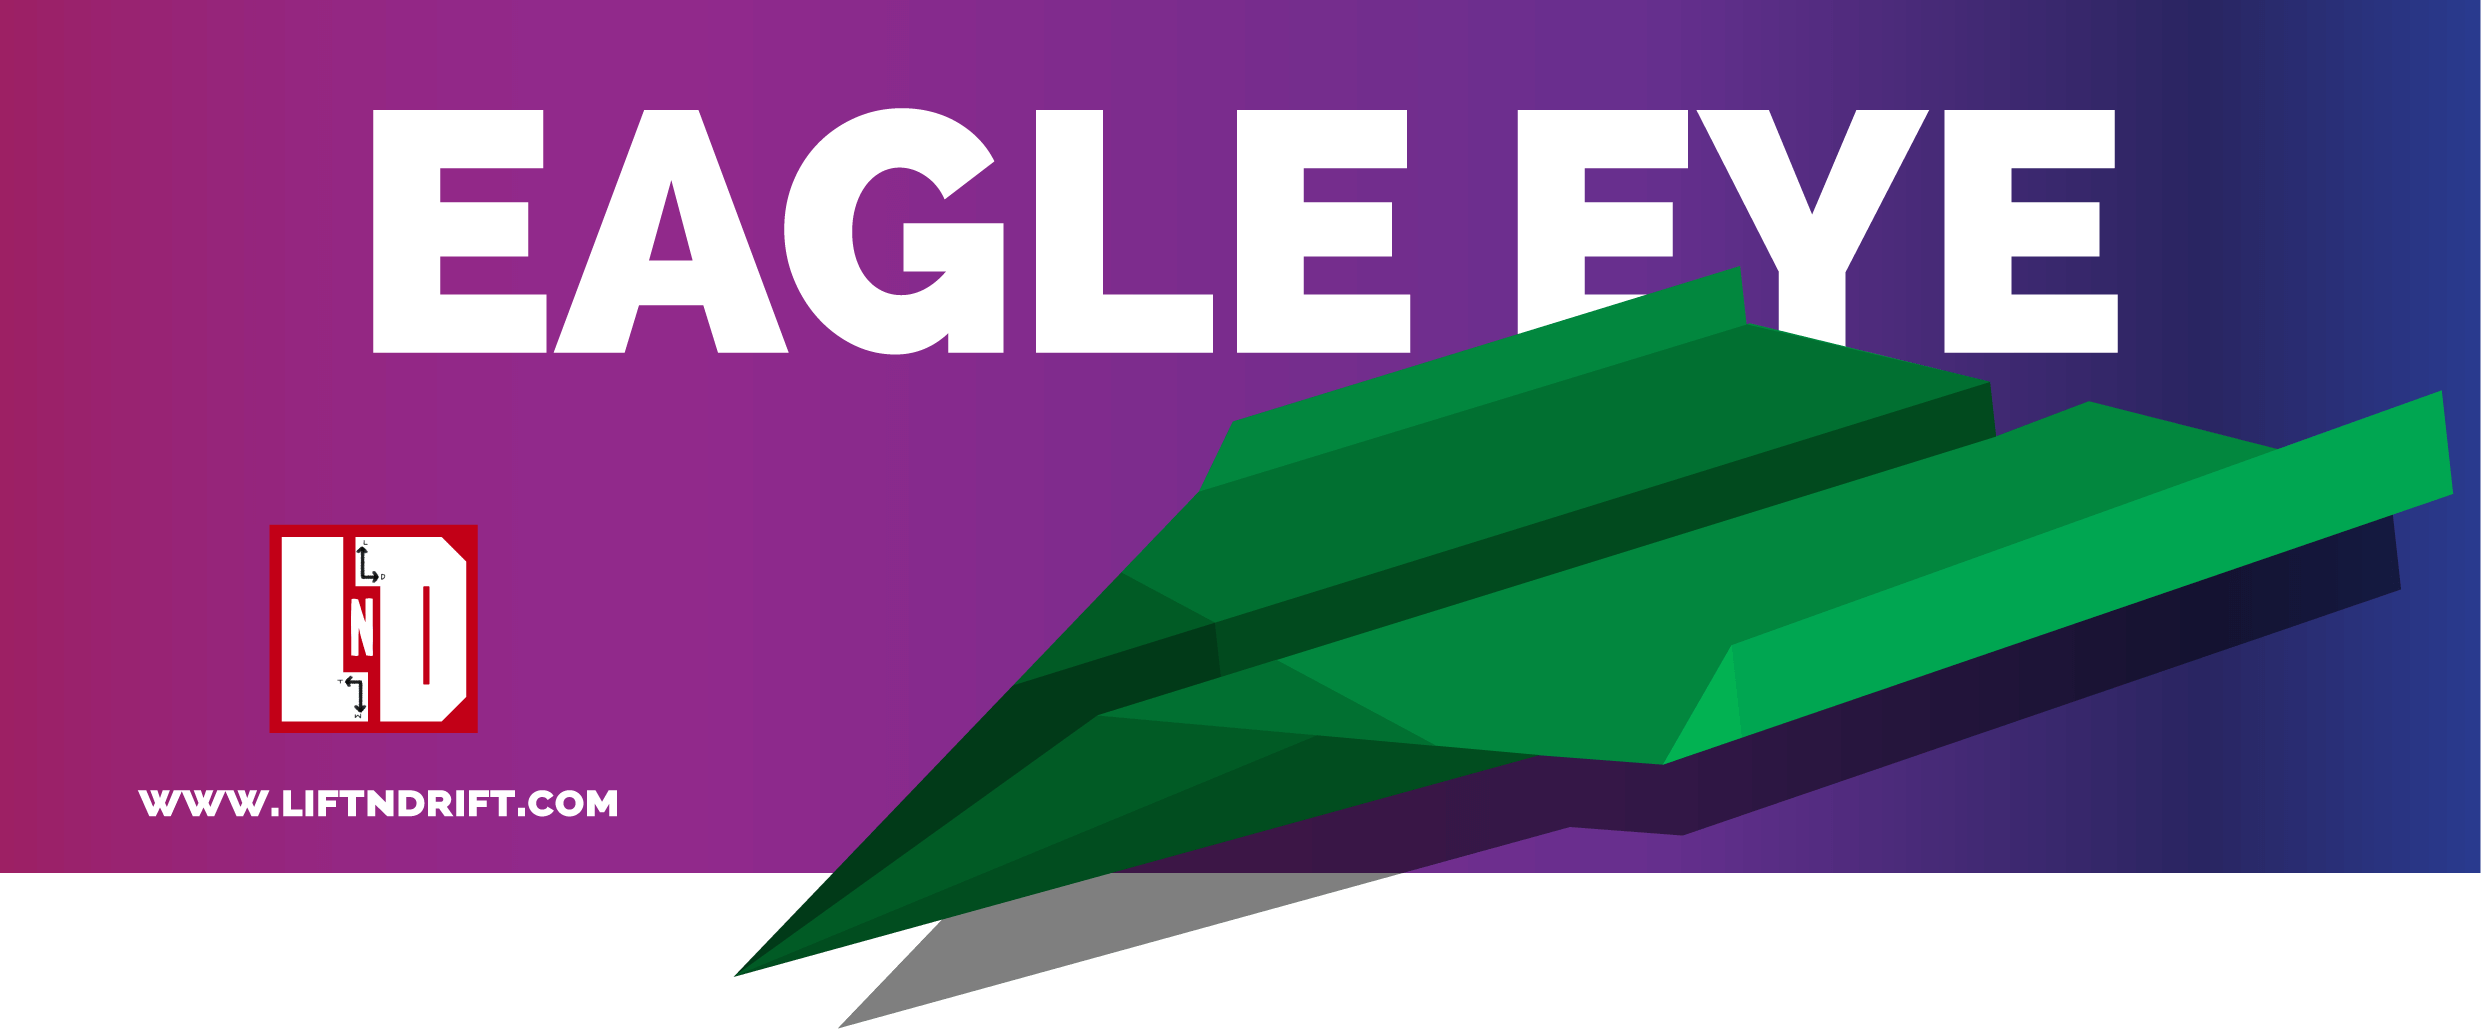 Eagle eye paper airplane